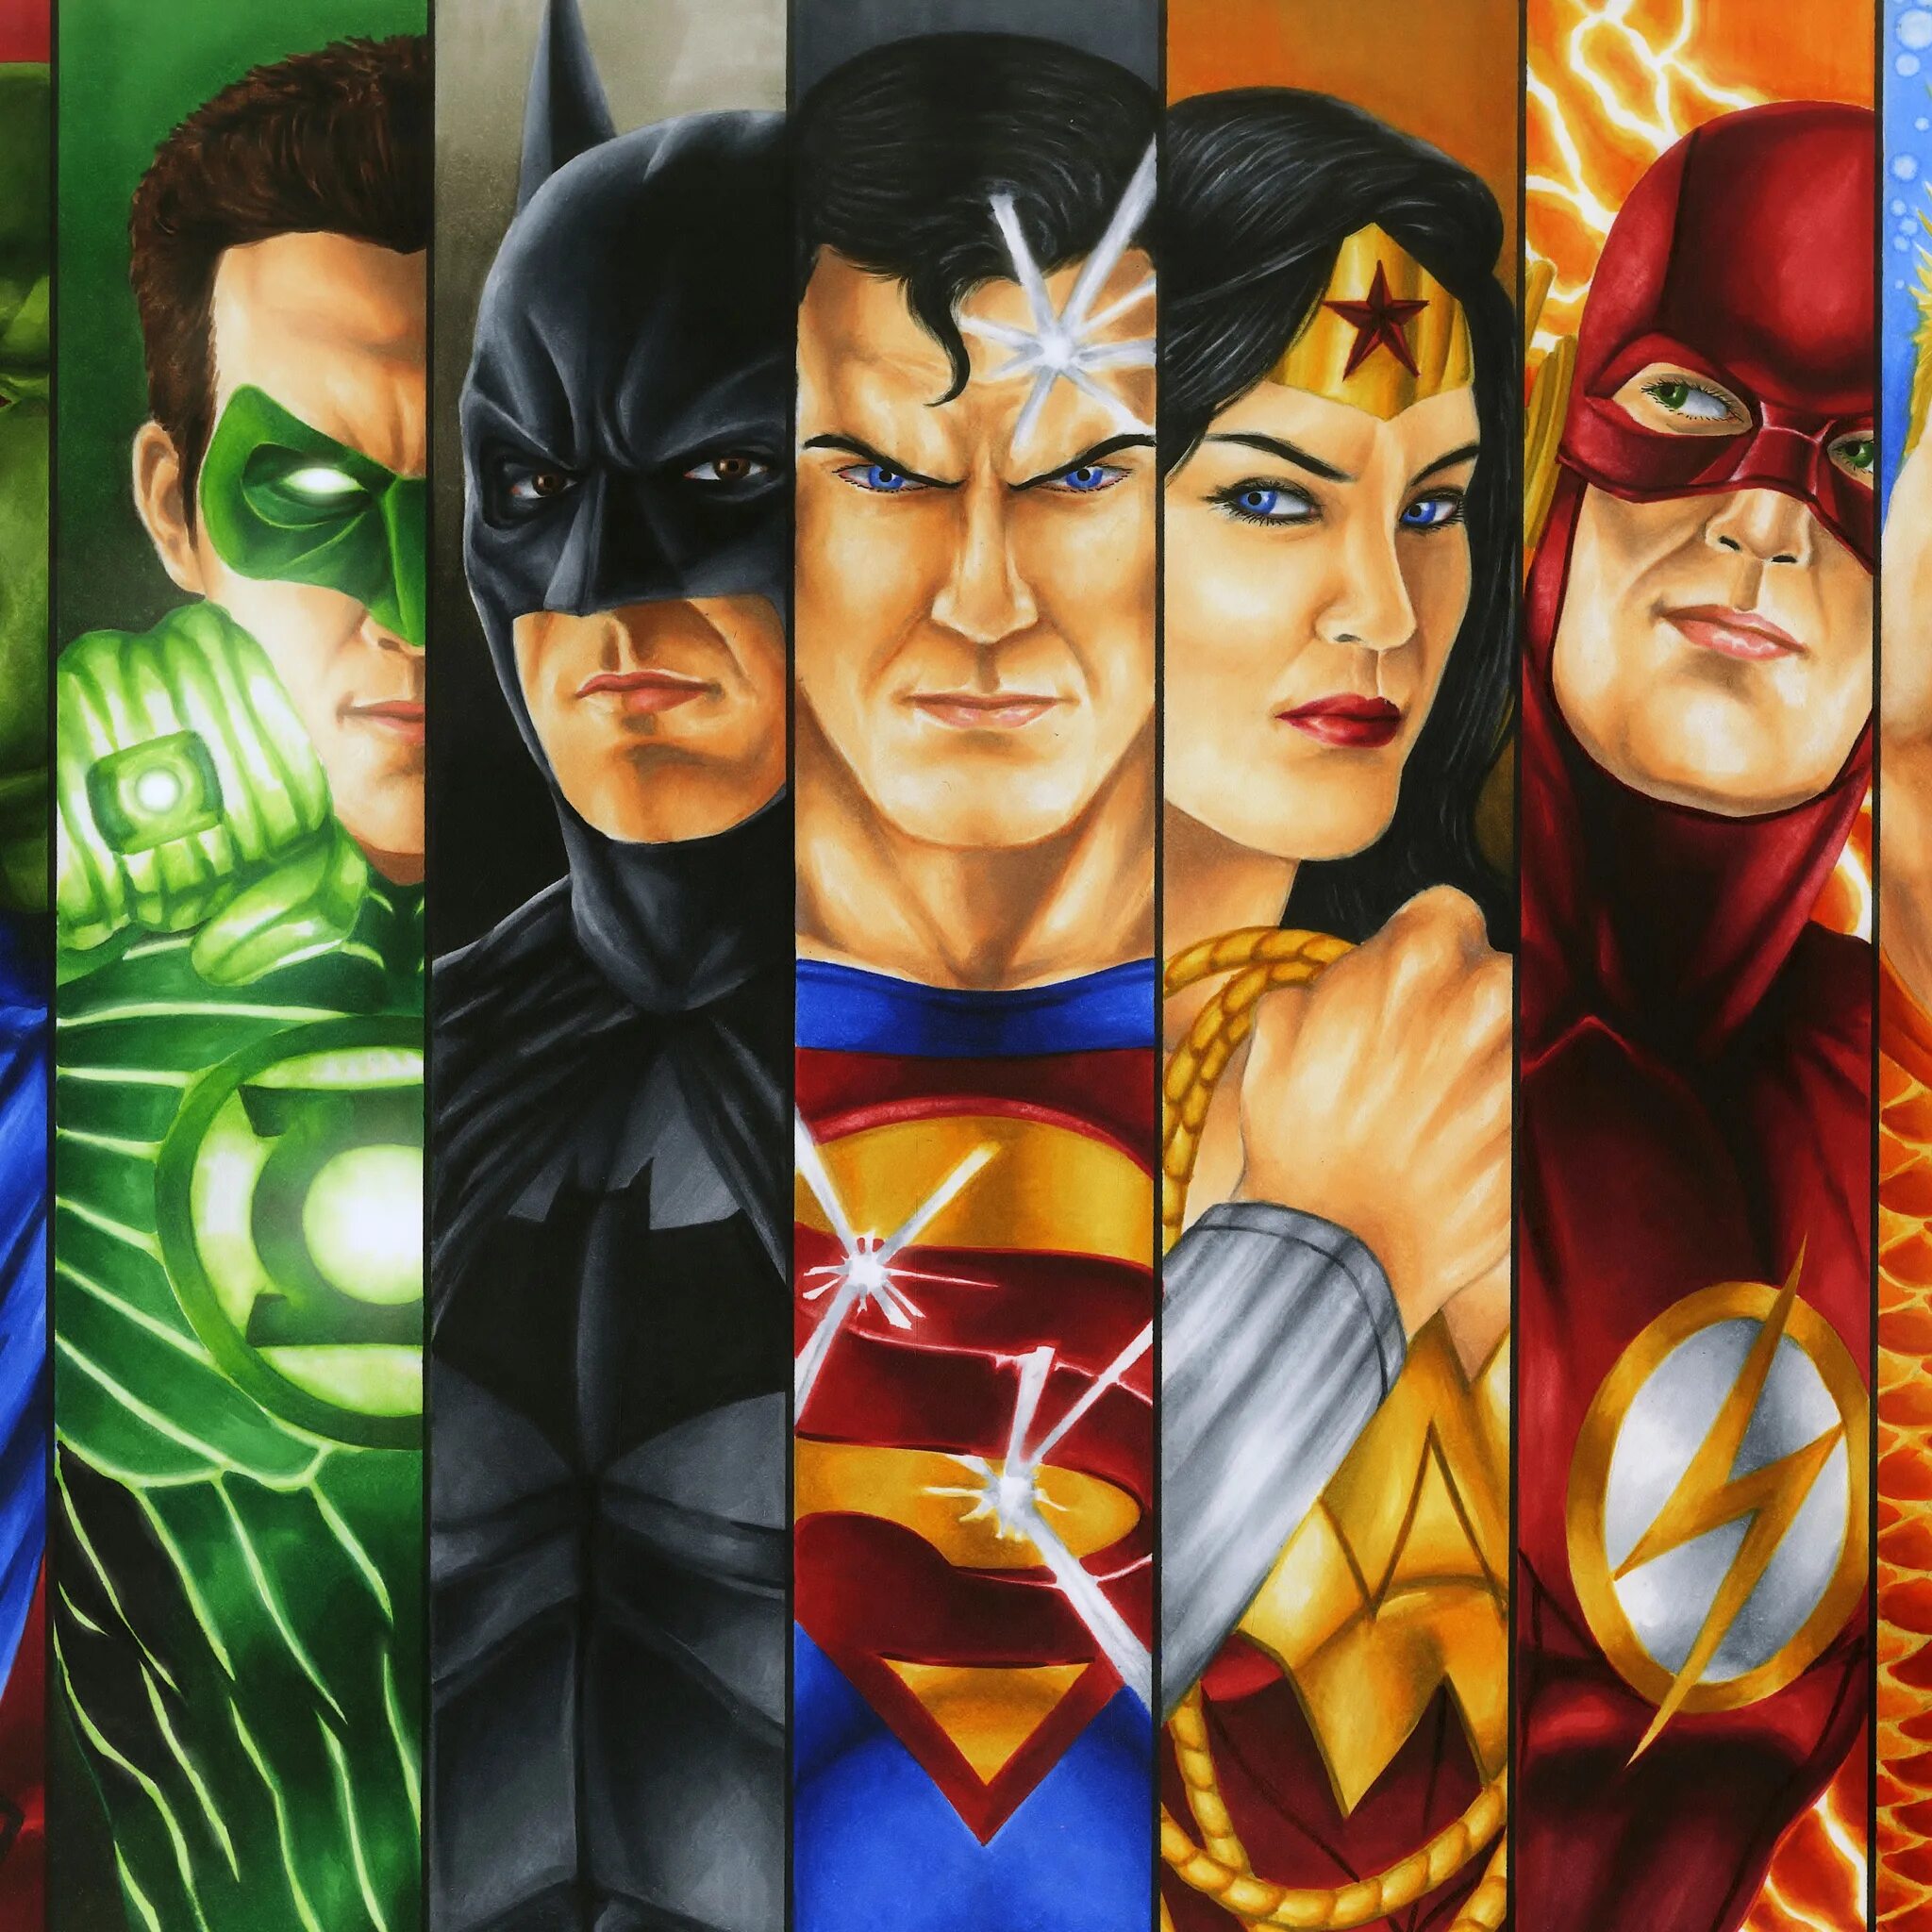 Justice league 2. Марвел лига справедливости. Плакат с супергероями. Супергерои лига справедливости. Лига справедливости персонажи.